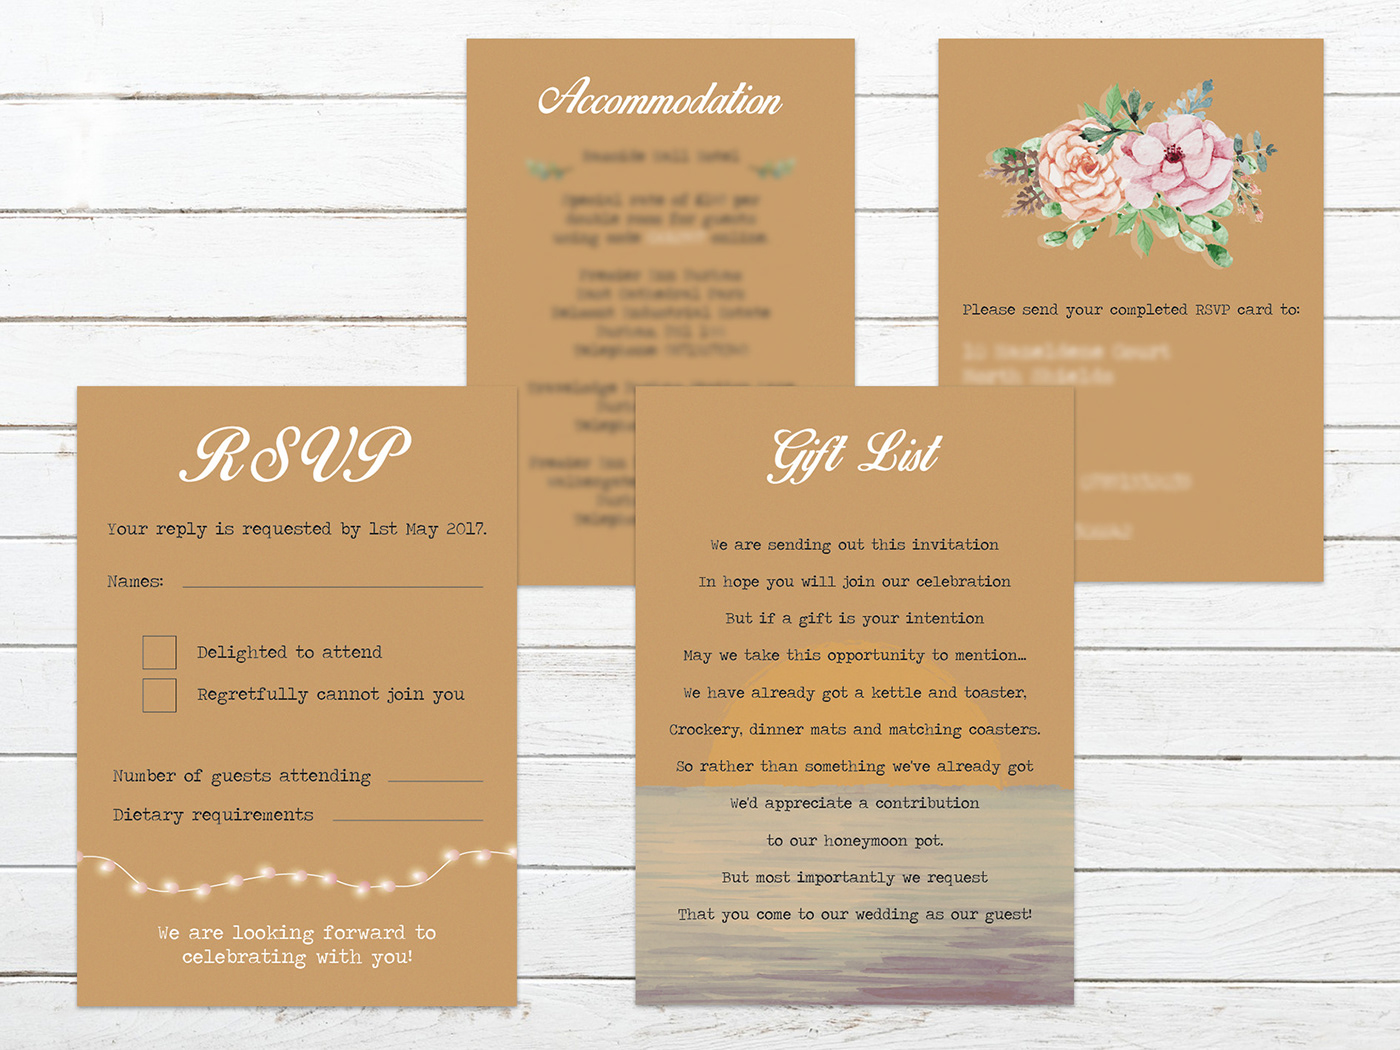 graphic design  Invitation card design wedding